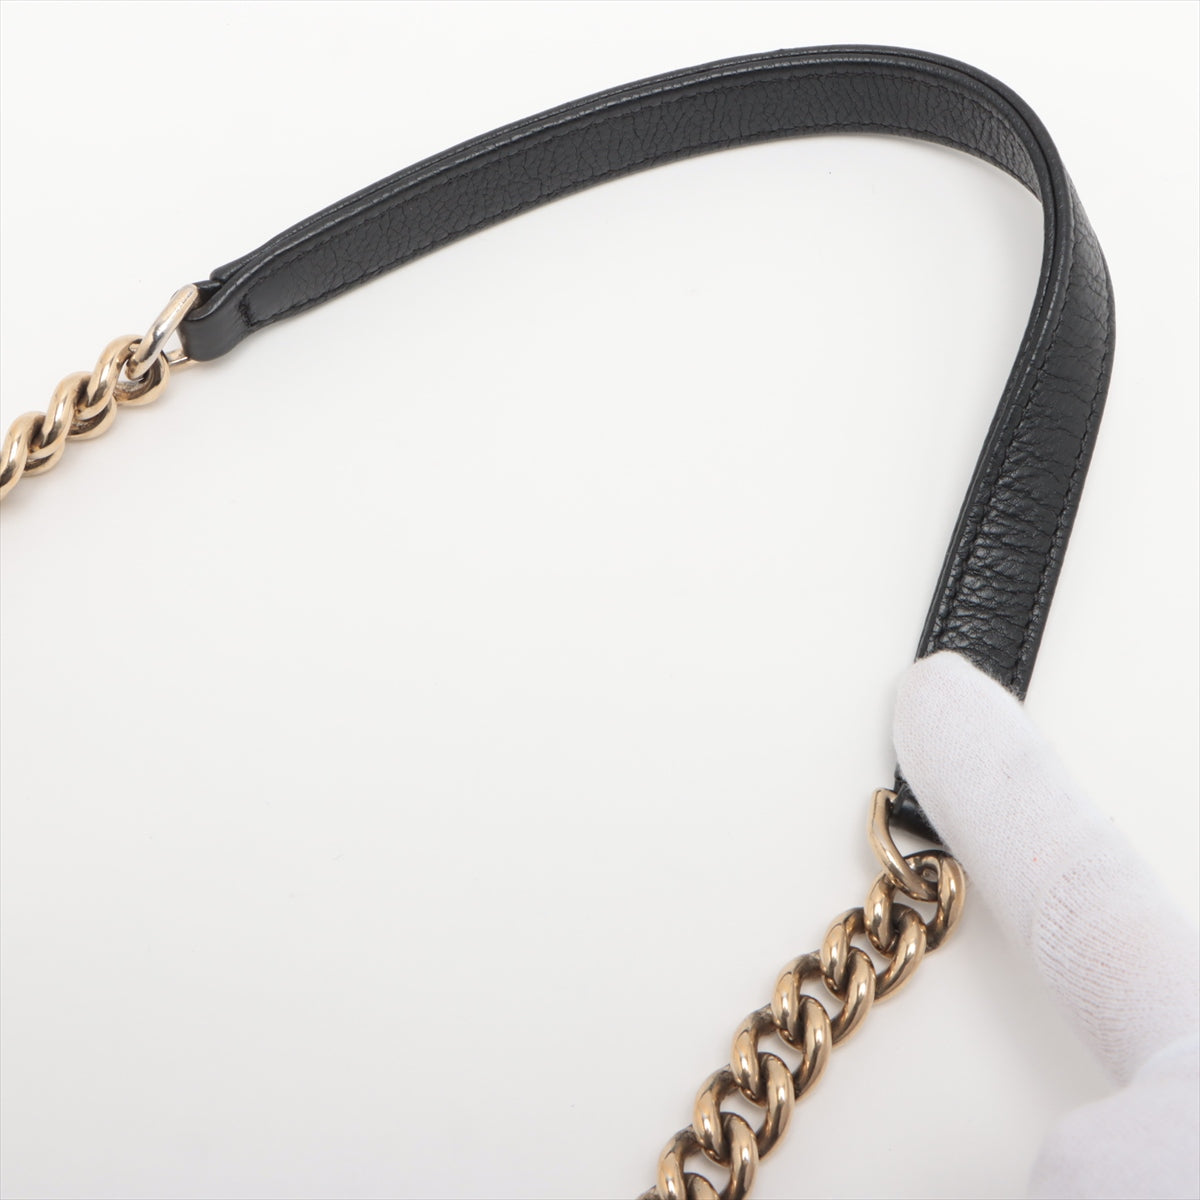 Chanel Matrasse  2WAY Handbag Chain Shoulder Black G  23rd